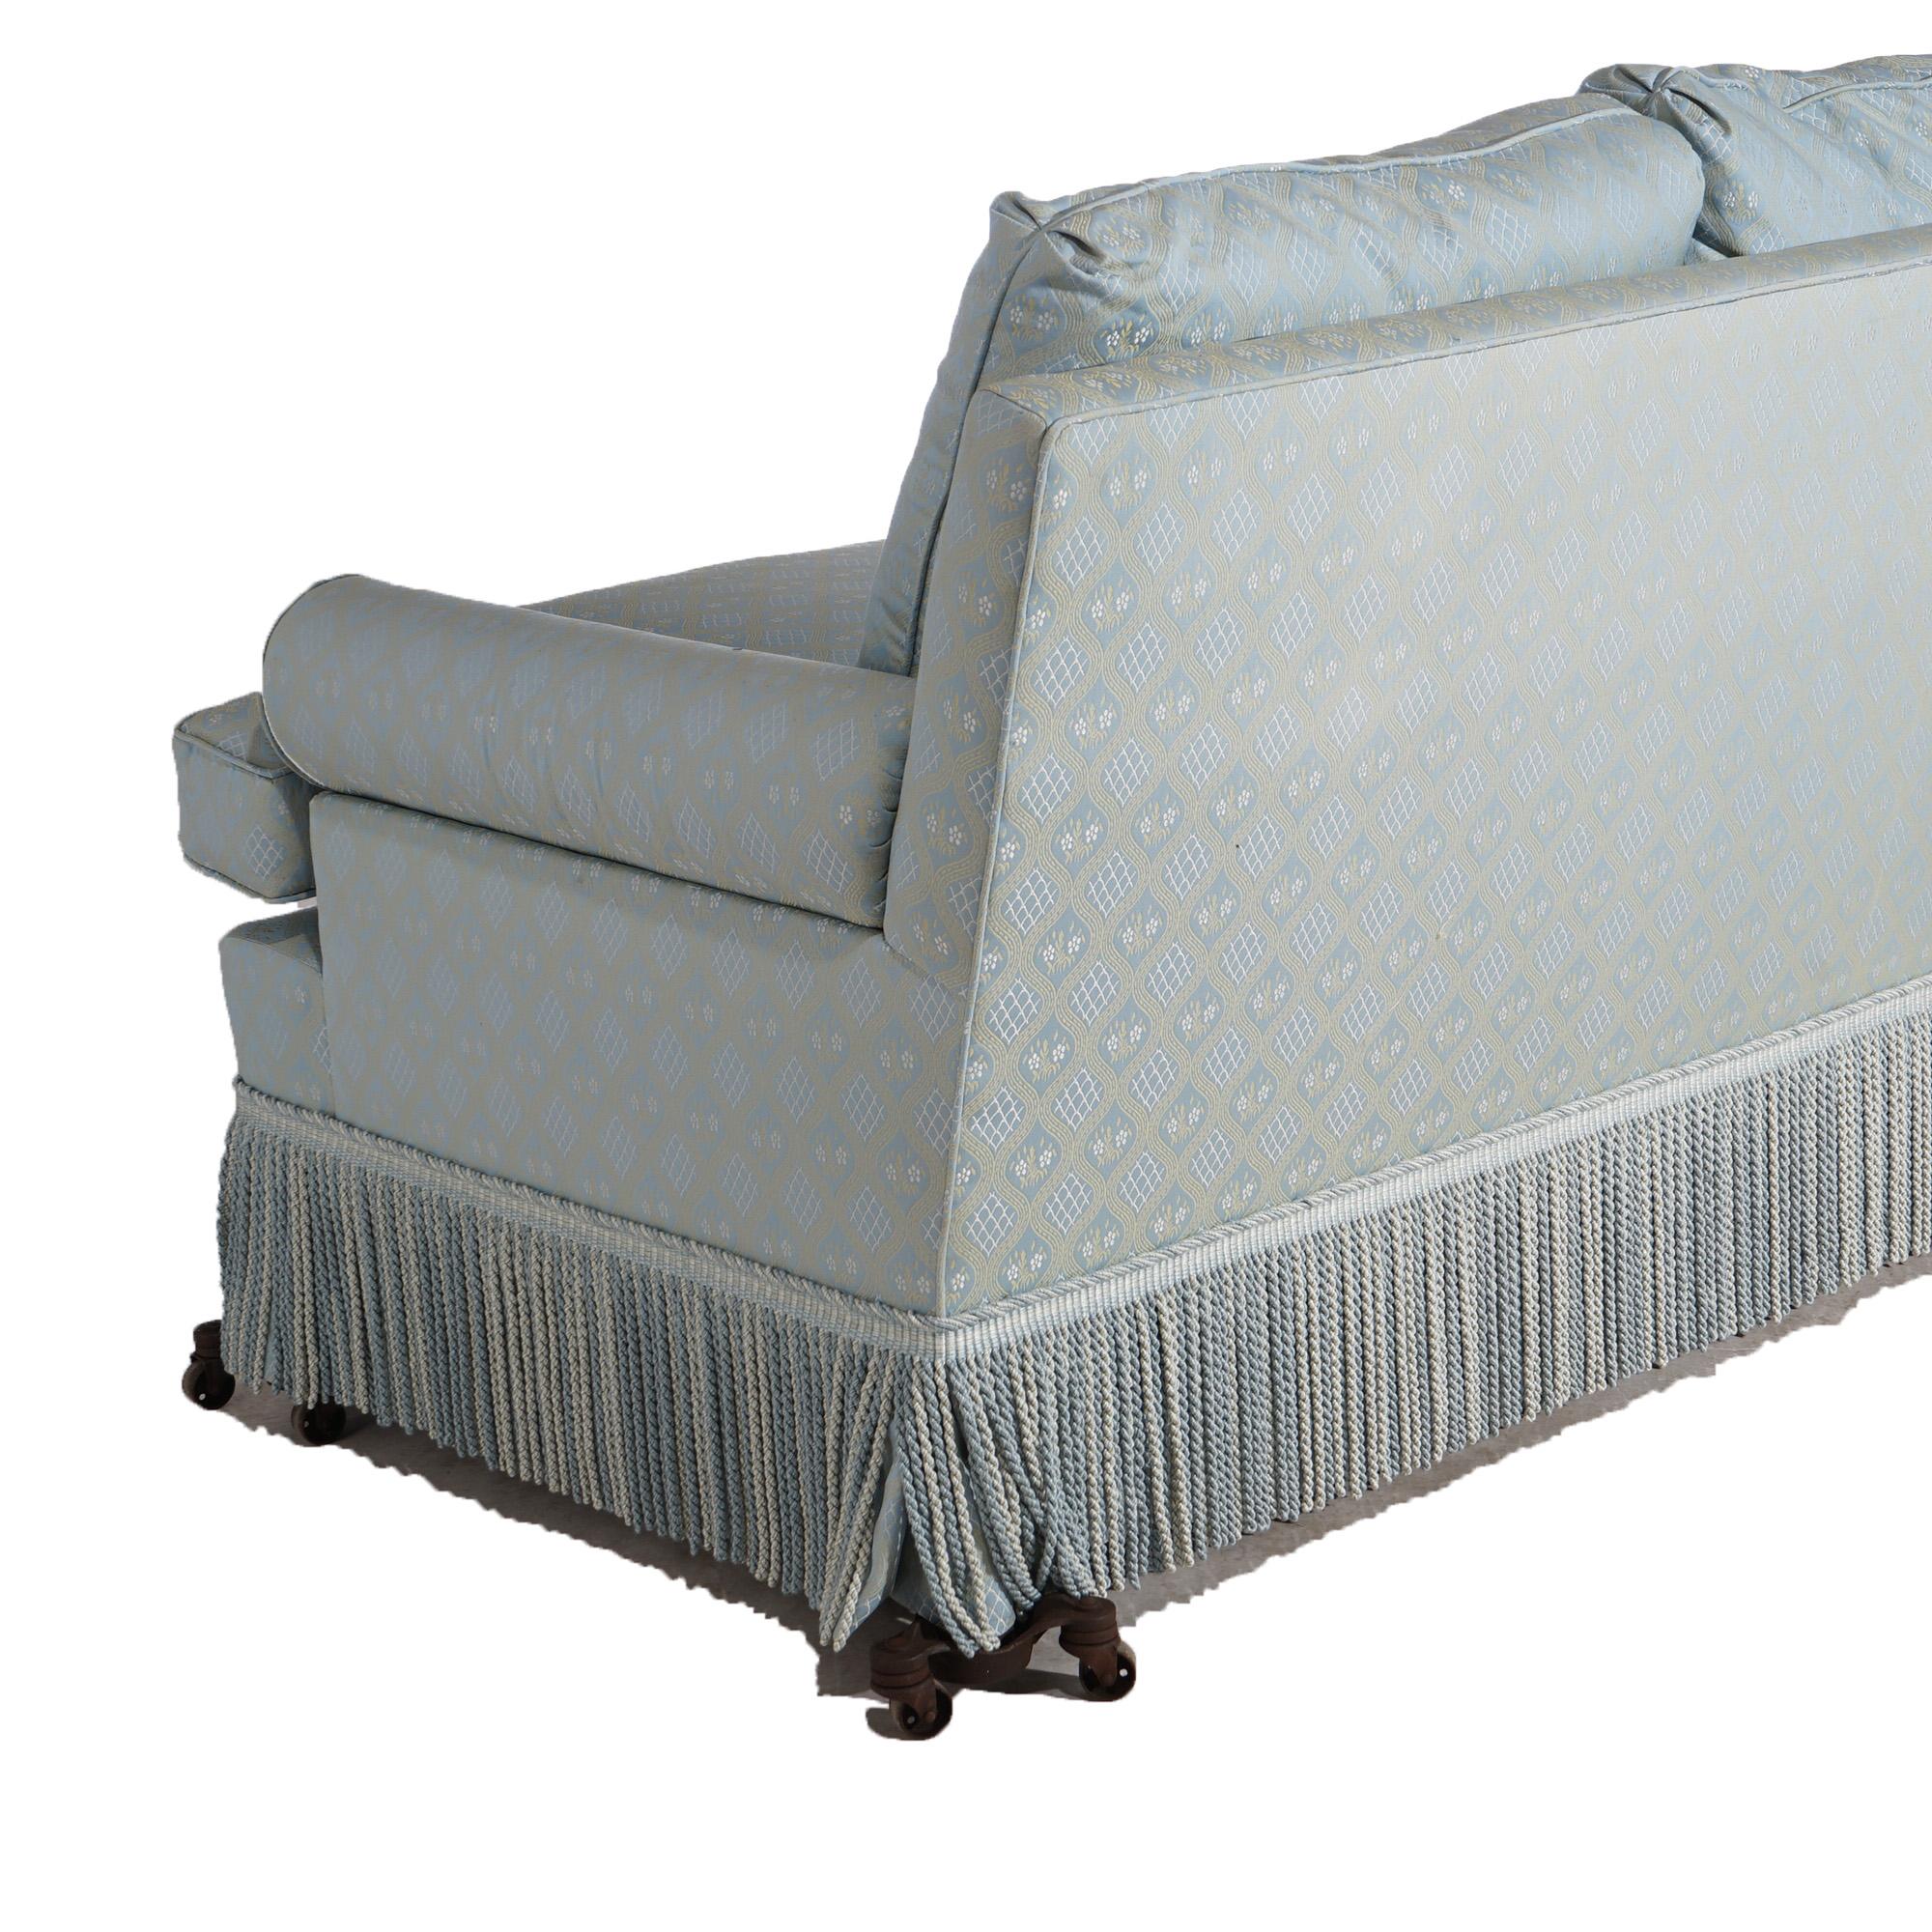 20th Century Hollywood Regency Upholstered Pillow Back Long Sofa with Fringe Skirt 20thC For Sale